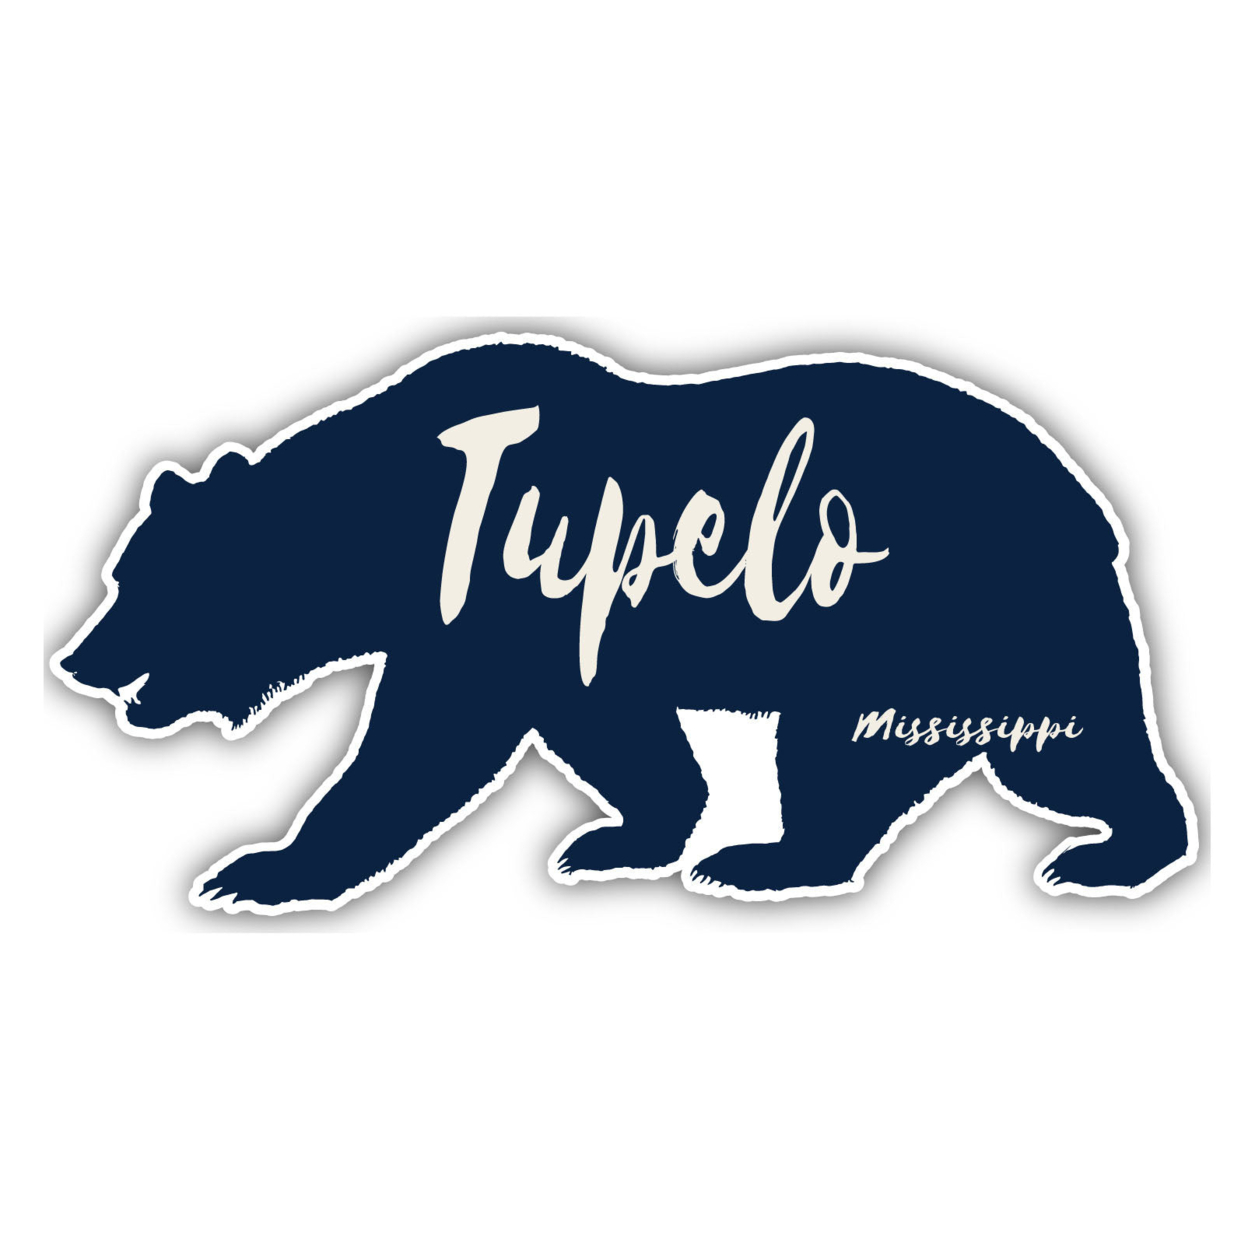 Tupelo Mississippi Souvenir Decorative Stickers (Choose Theme And Size) - Single Unit, 2-Inch, Tent